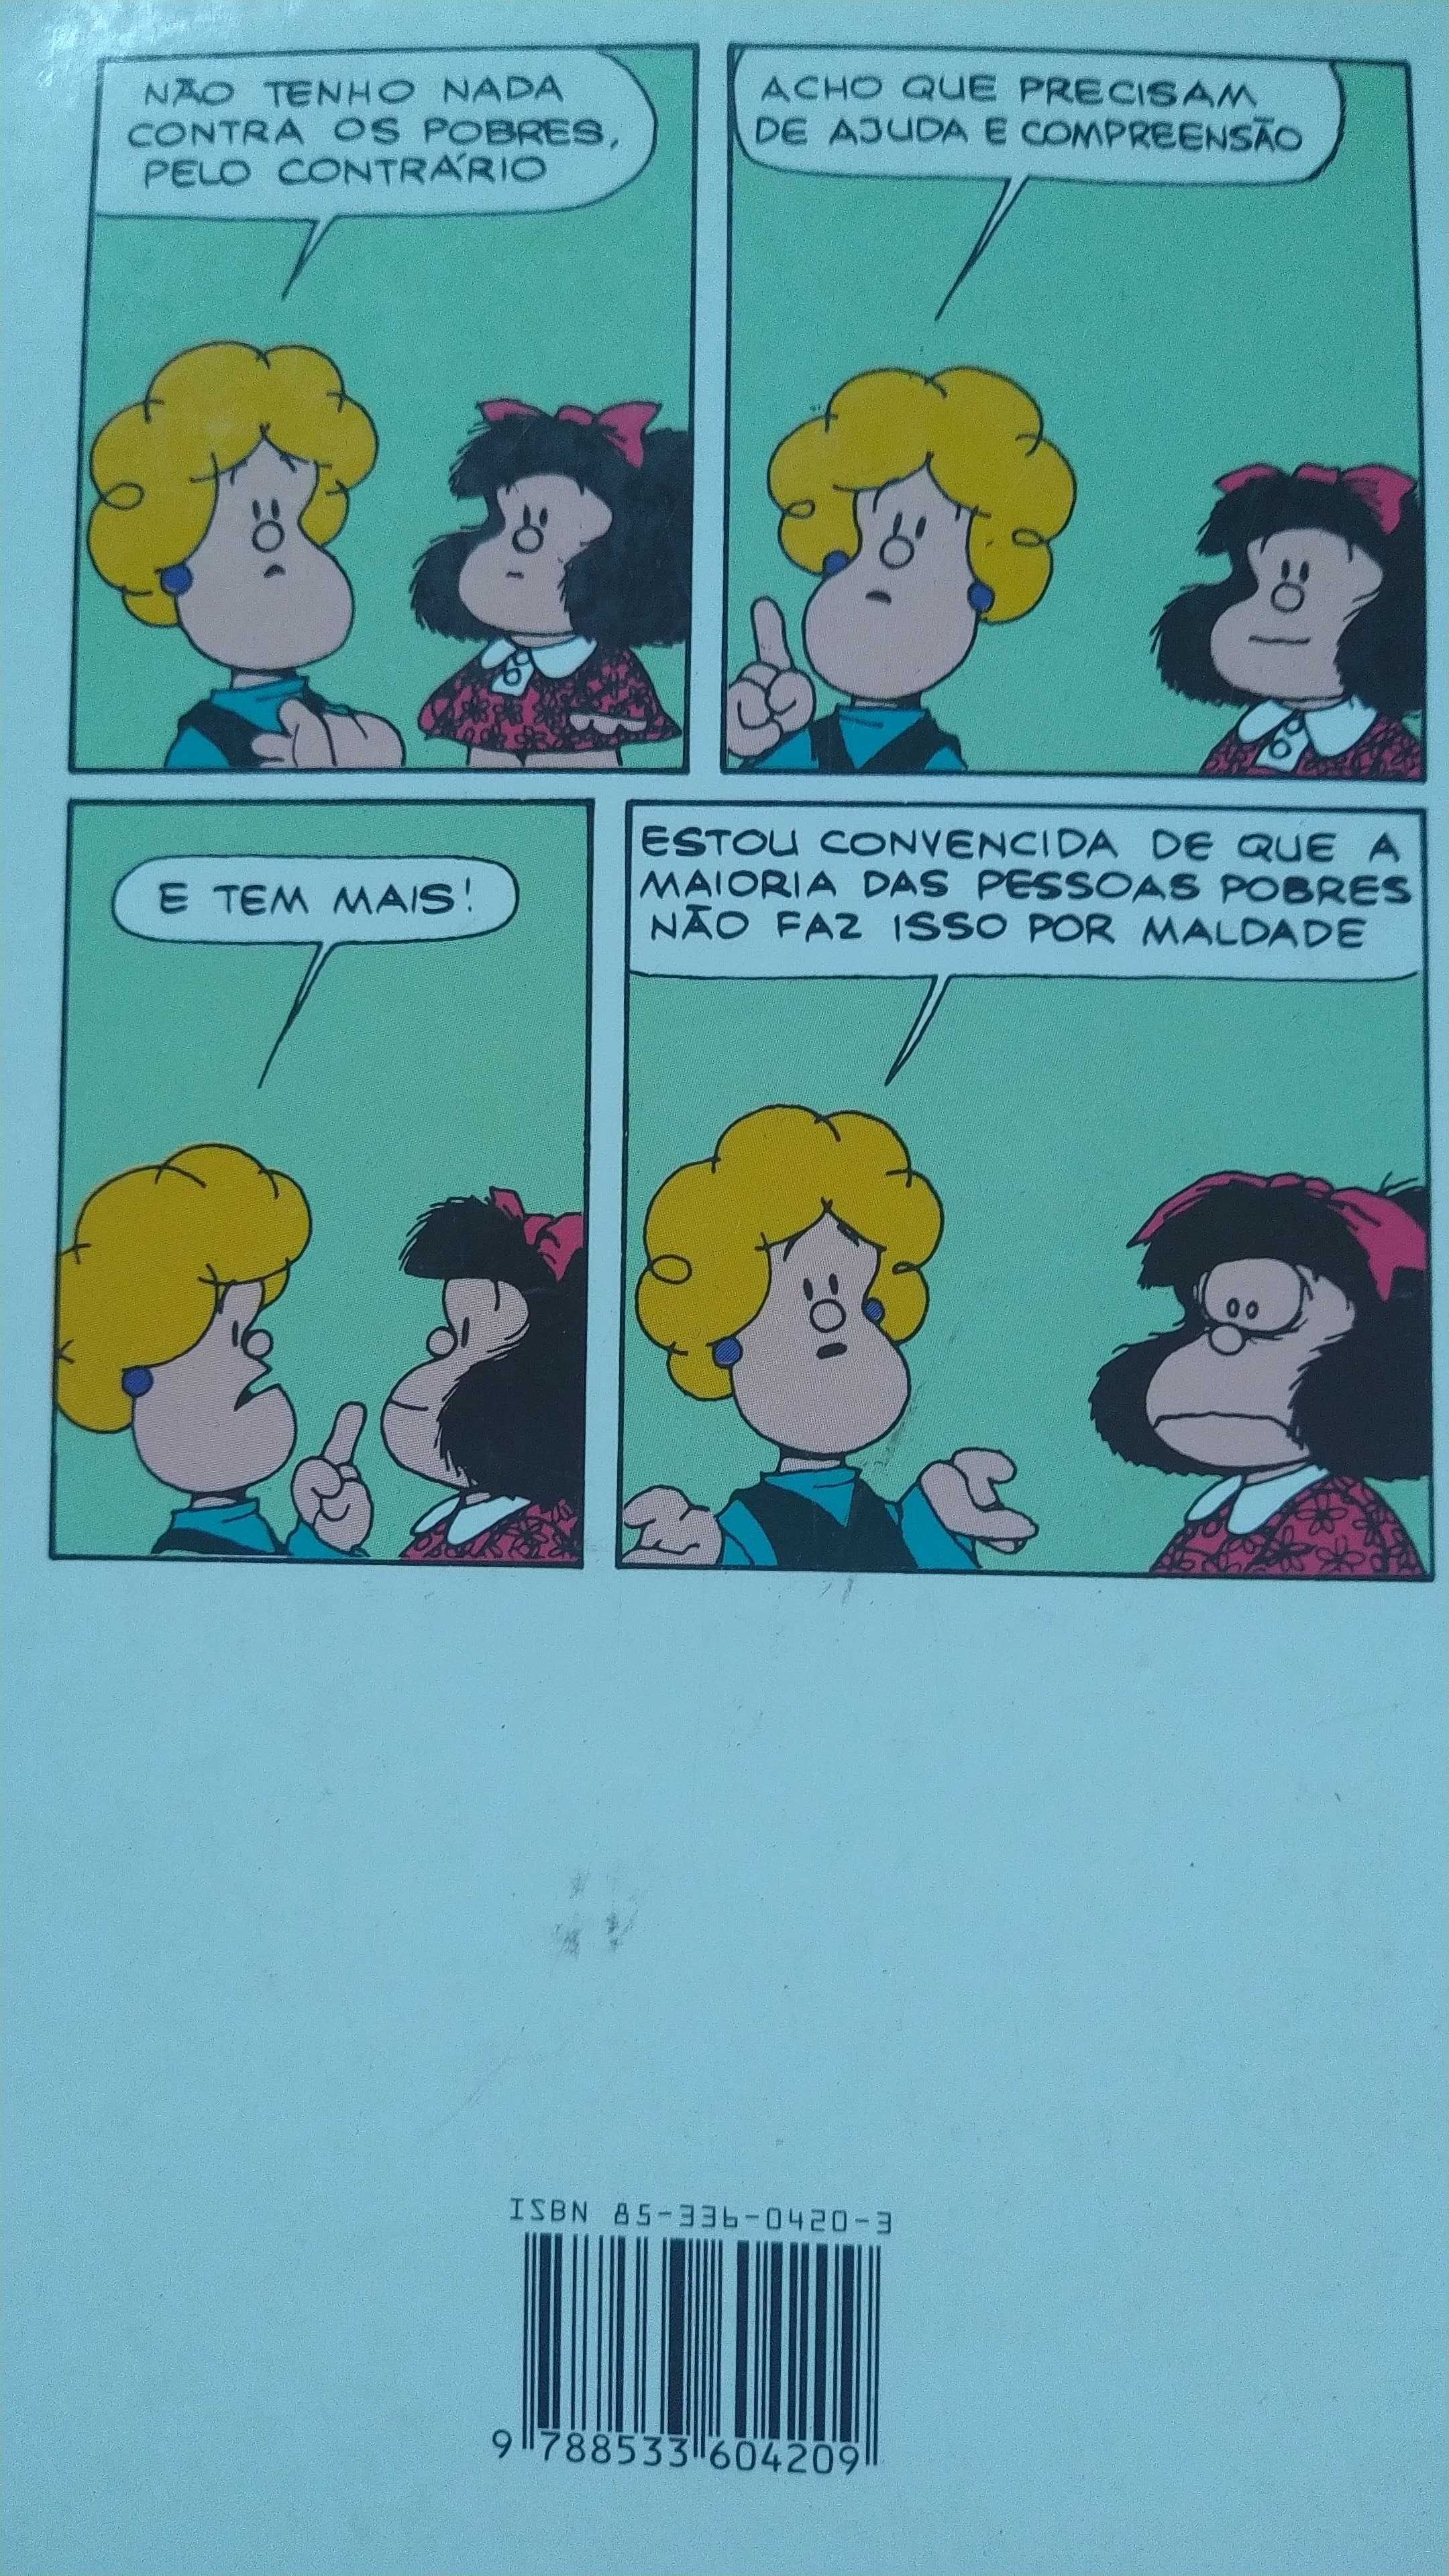 Livro da Mafalda